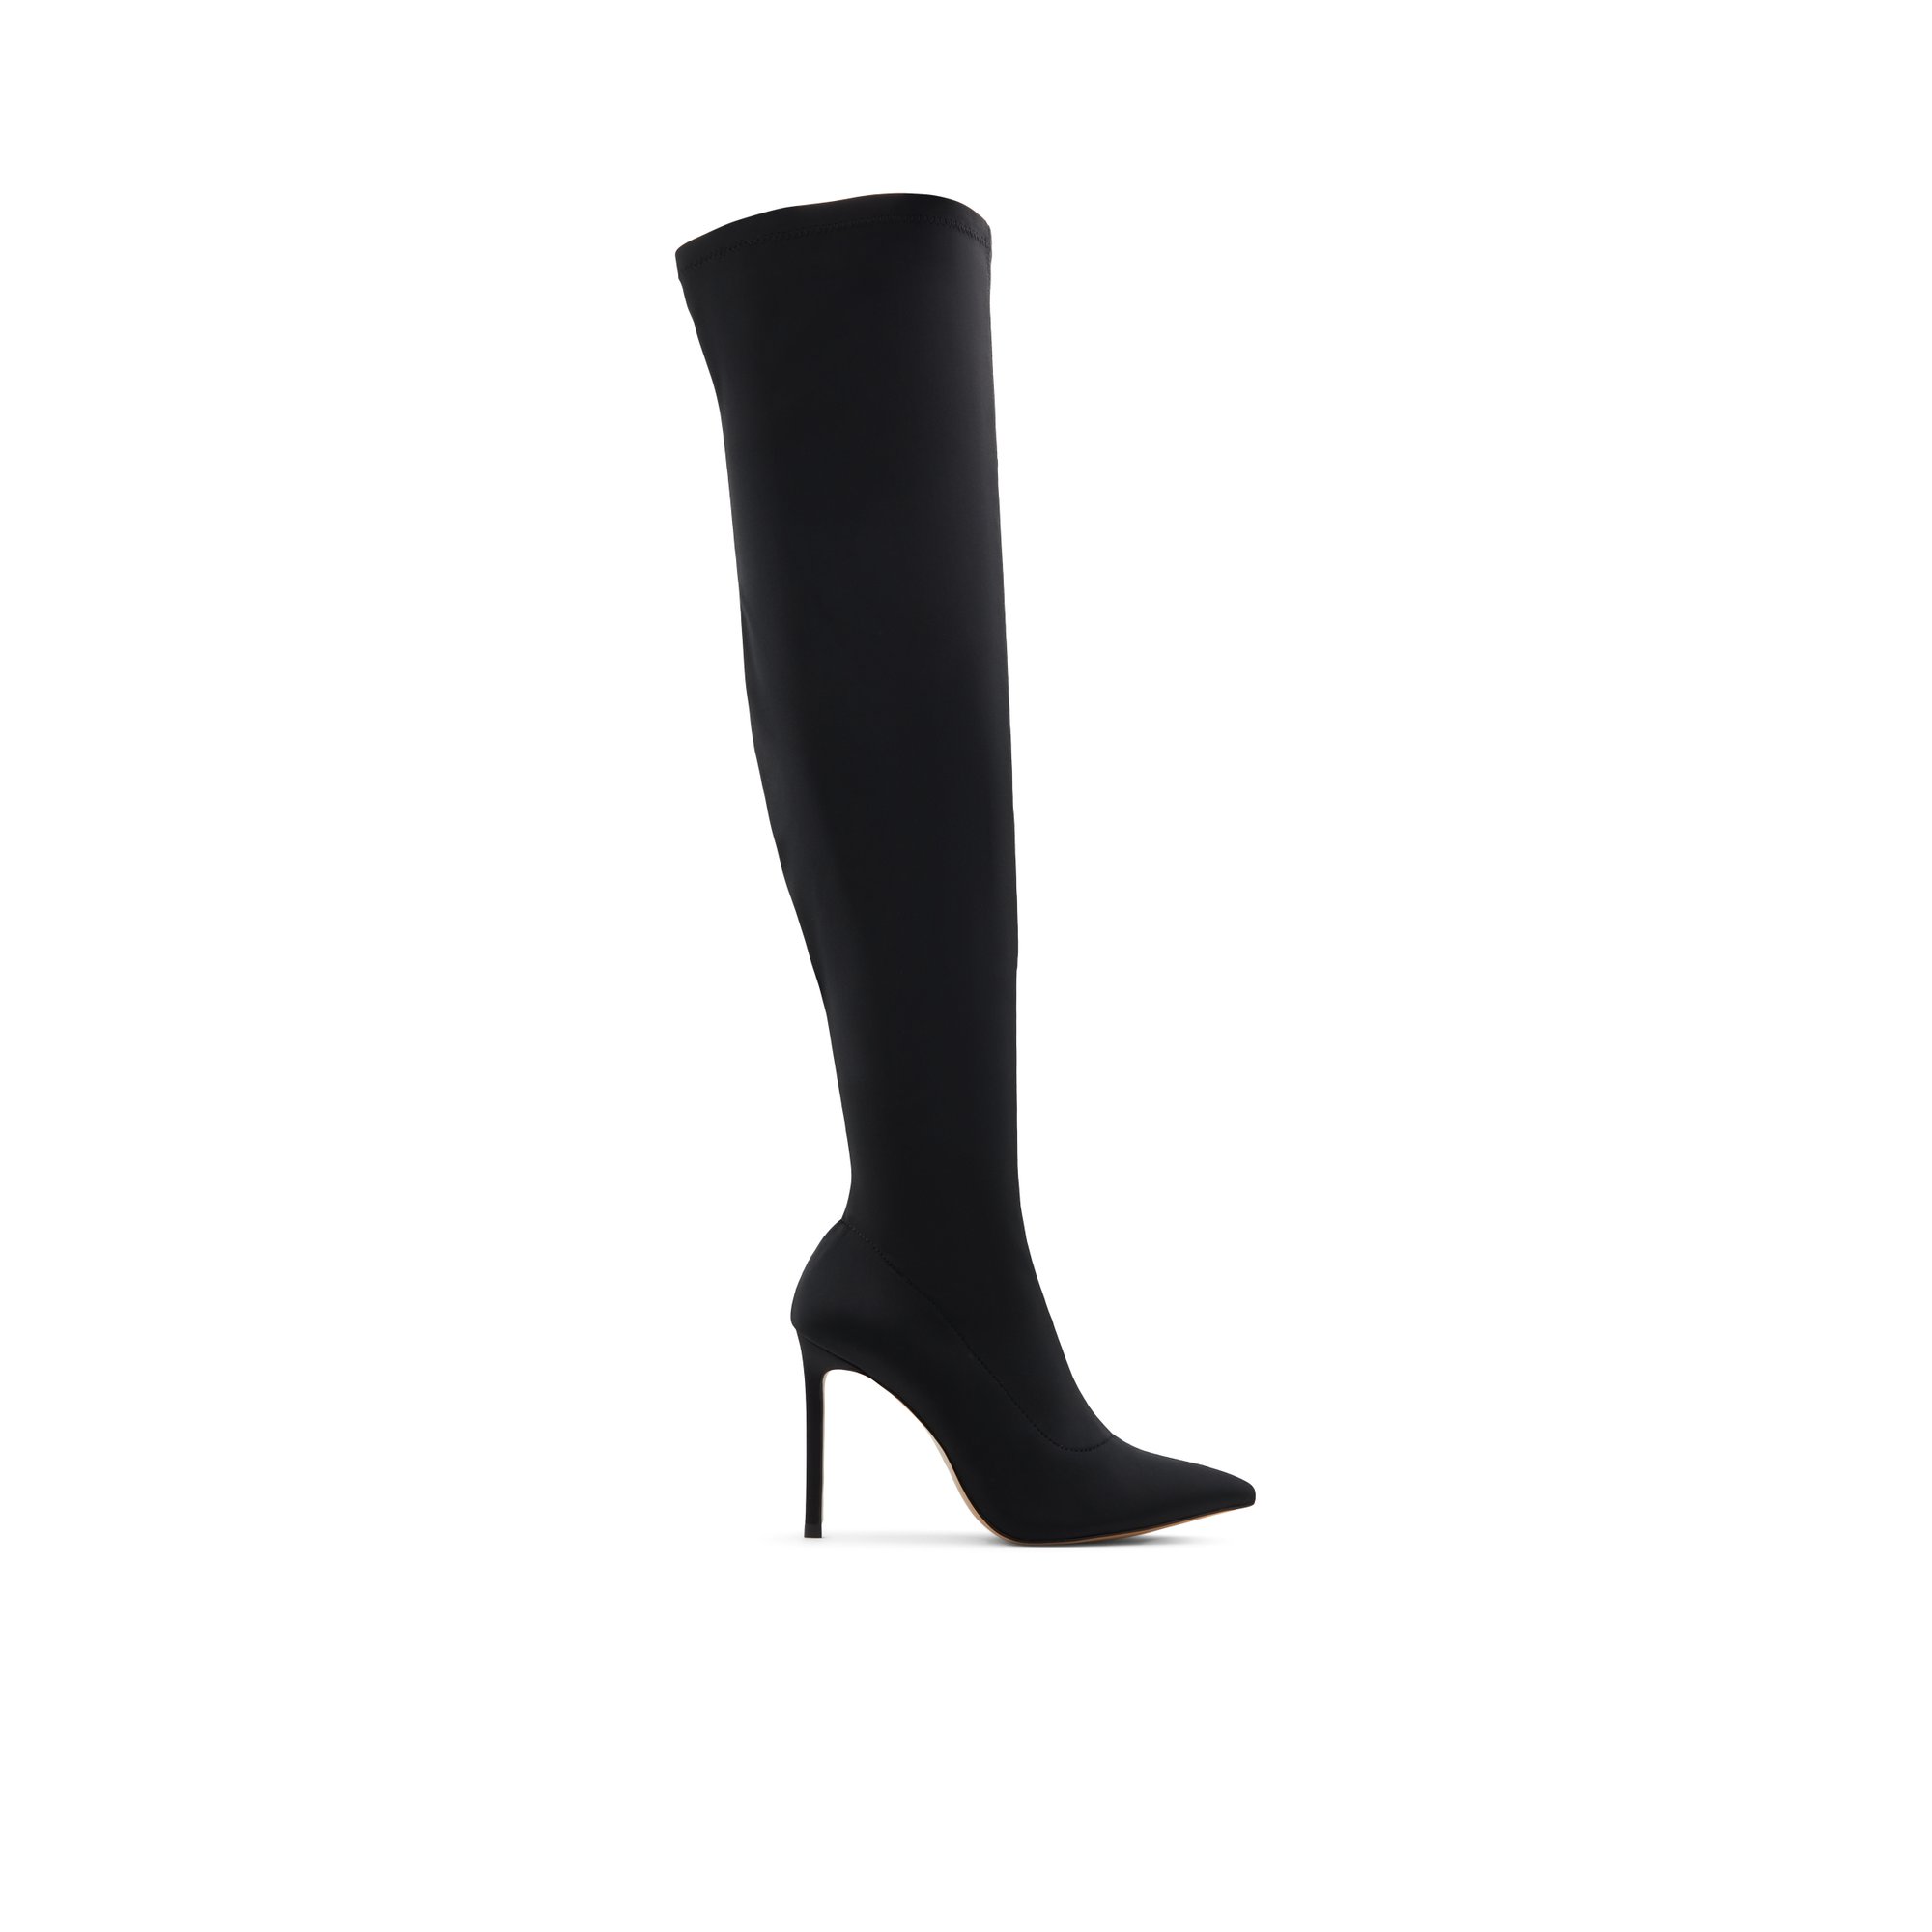 ALDO Acassia - Women's Boots Dress - Black